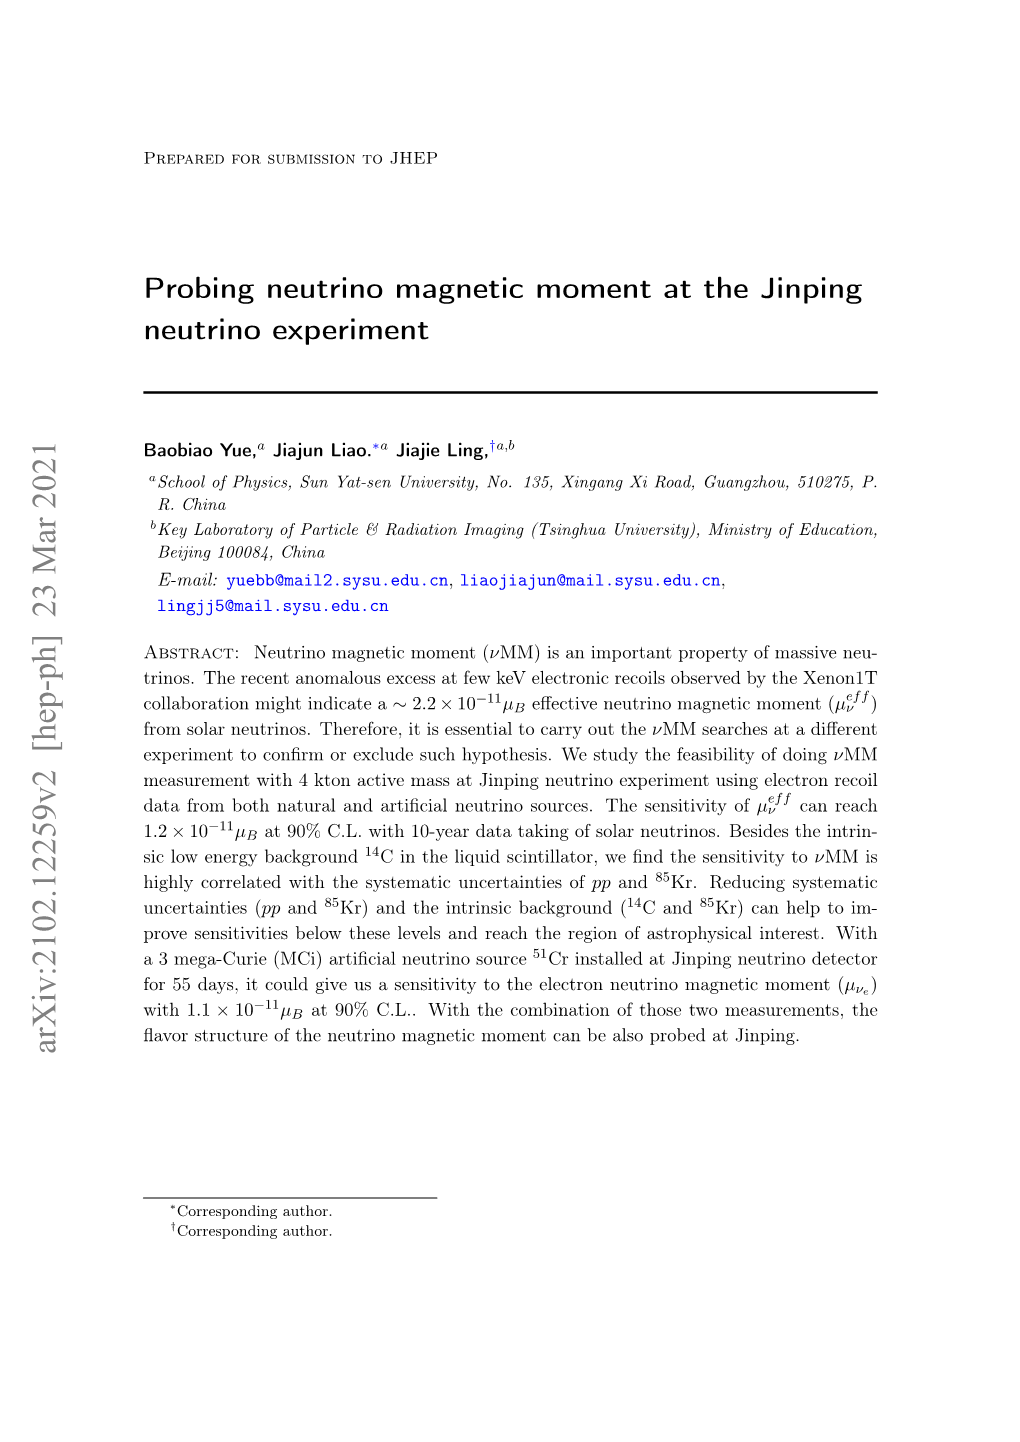 Probing Neutrino Magnetic Moment at the Jinping Neutrino Experiment